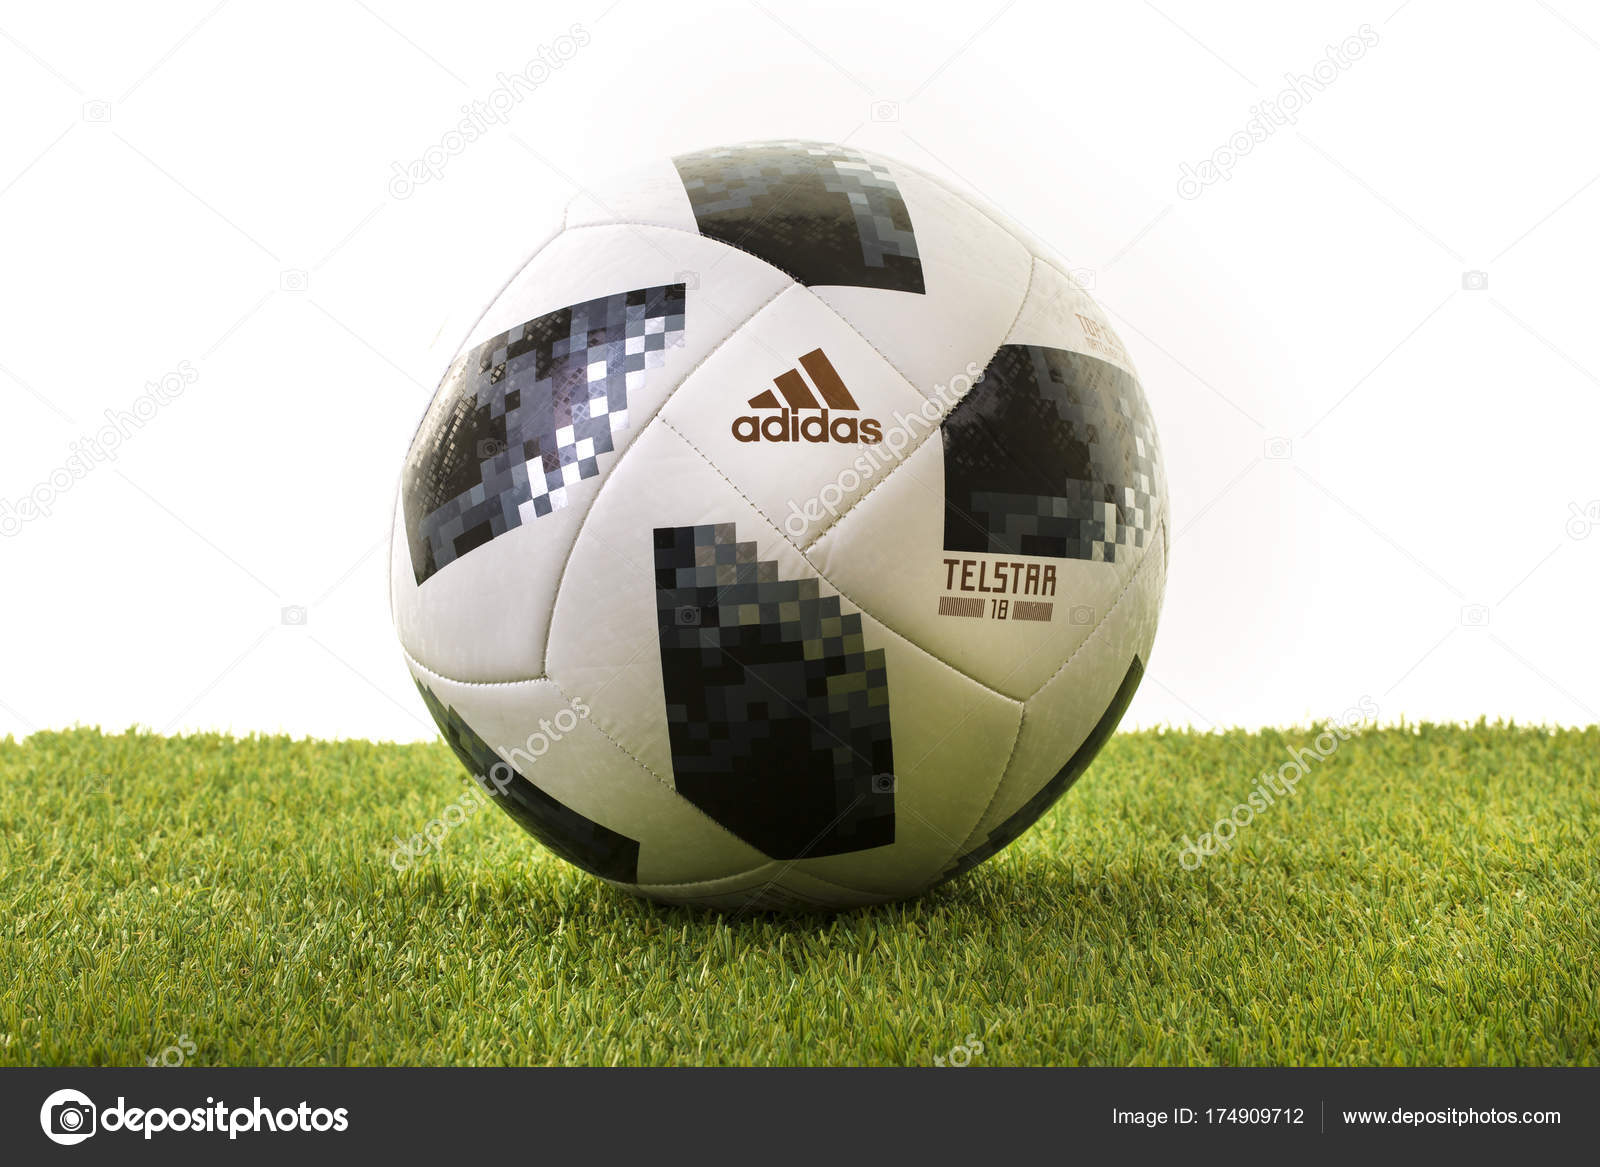 Adidas Brazuca World Cup 2014 Football – Stock Editorial Photo urbanbuzz #174909712